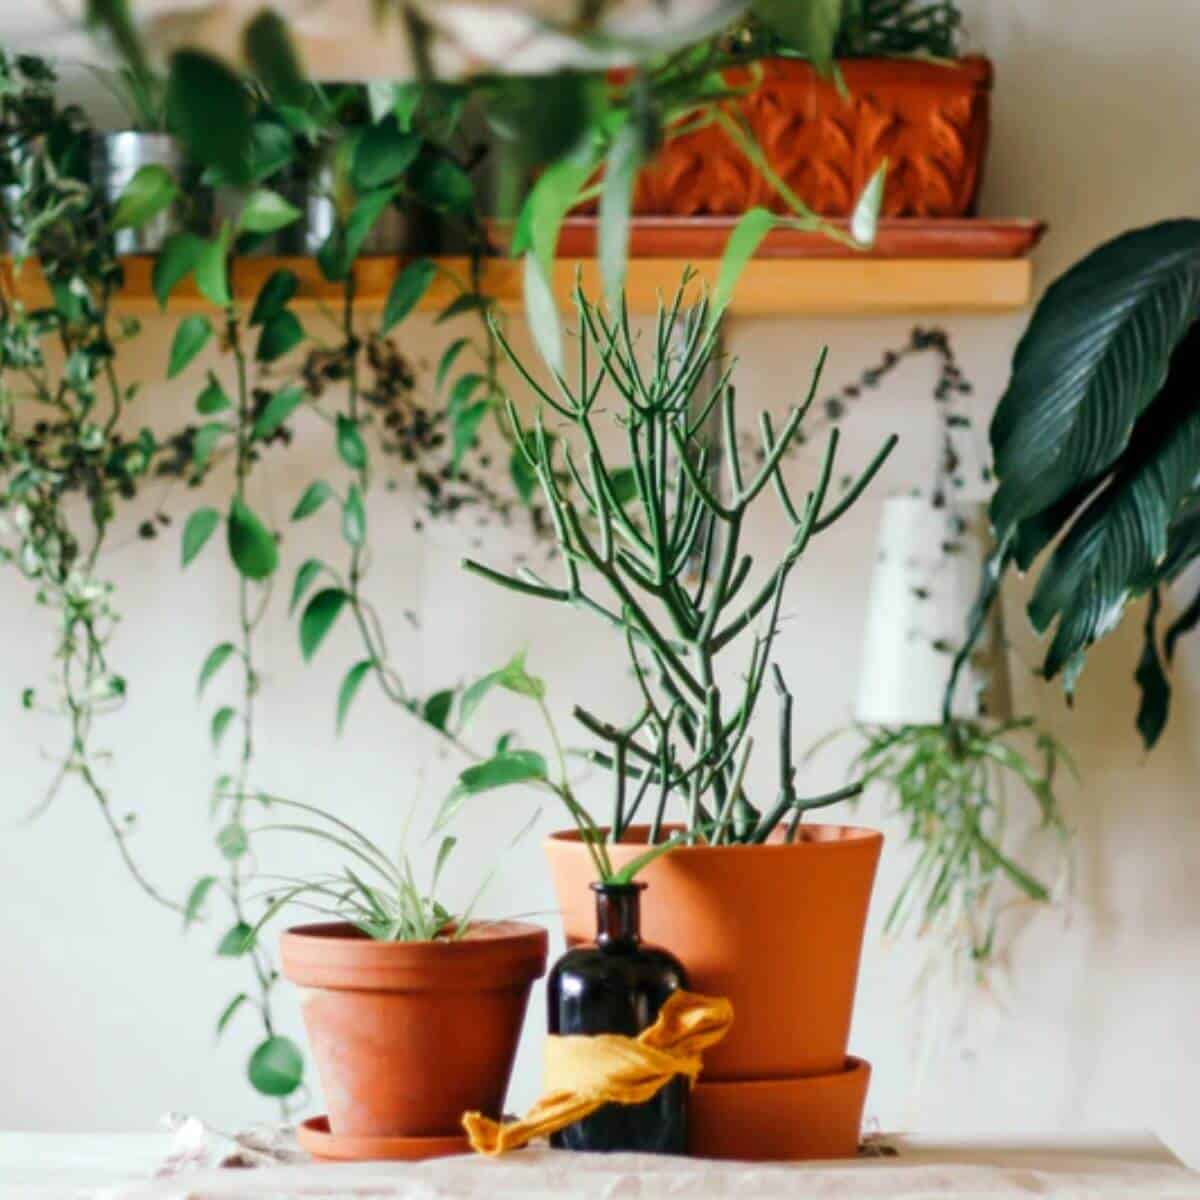 Plants in a pot.